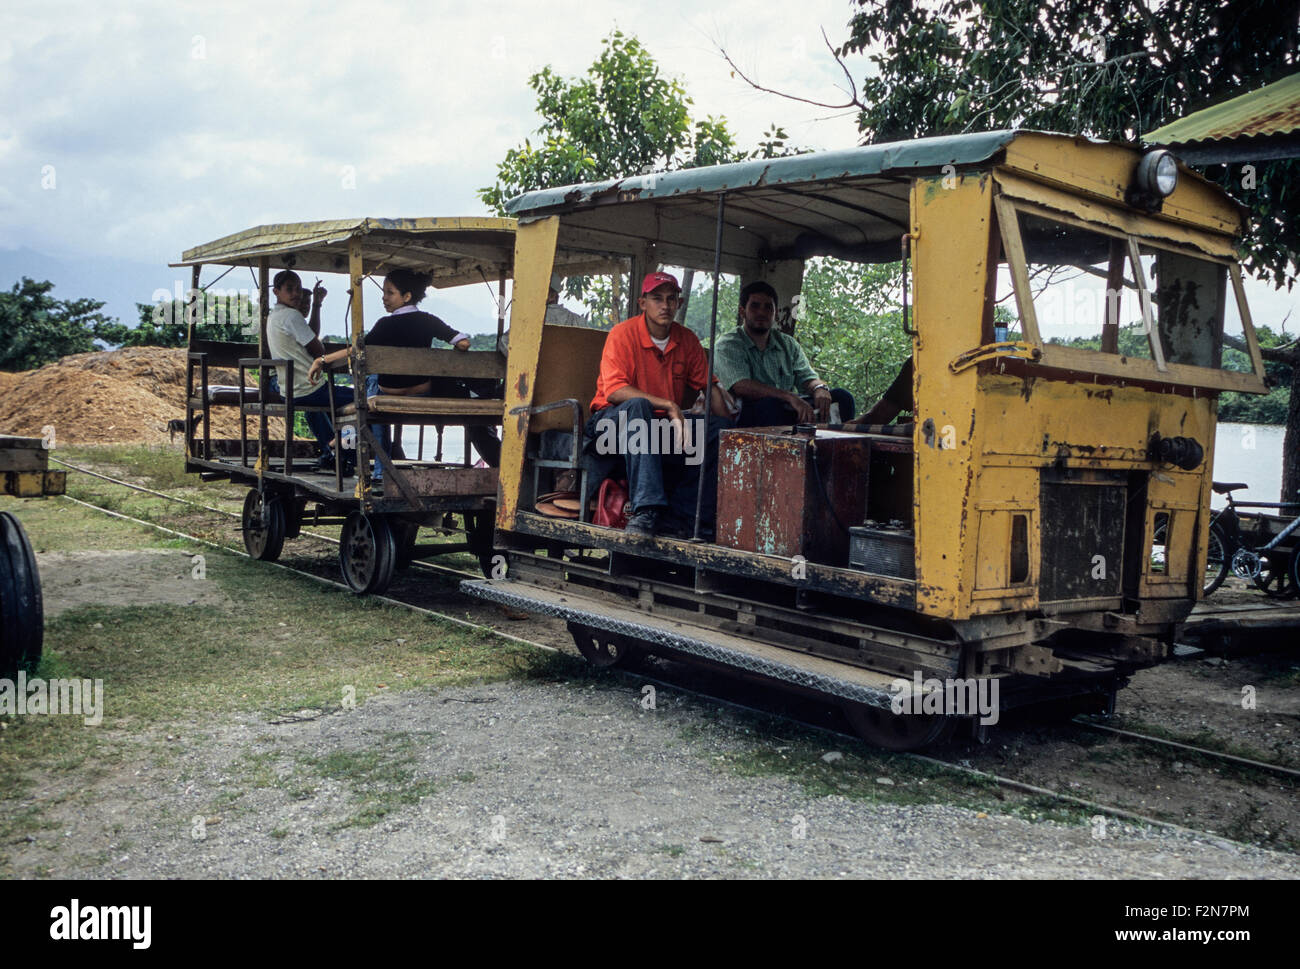 Honduras.  Train from banana plantation era now used to provide local transport, northern coastal area west of La Ceiba. Stock Photo